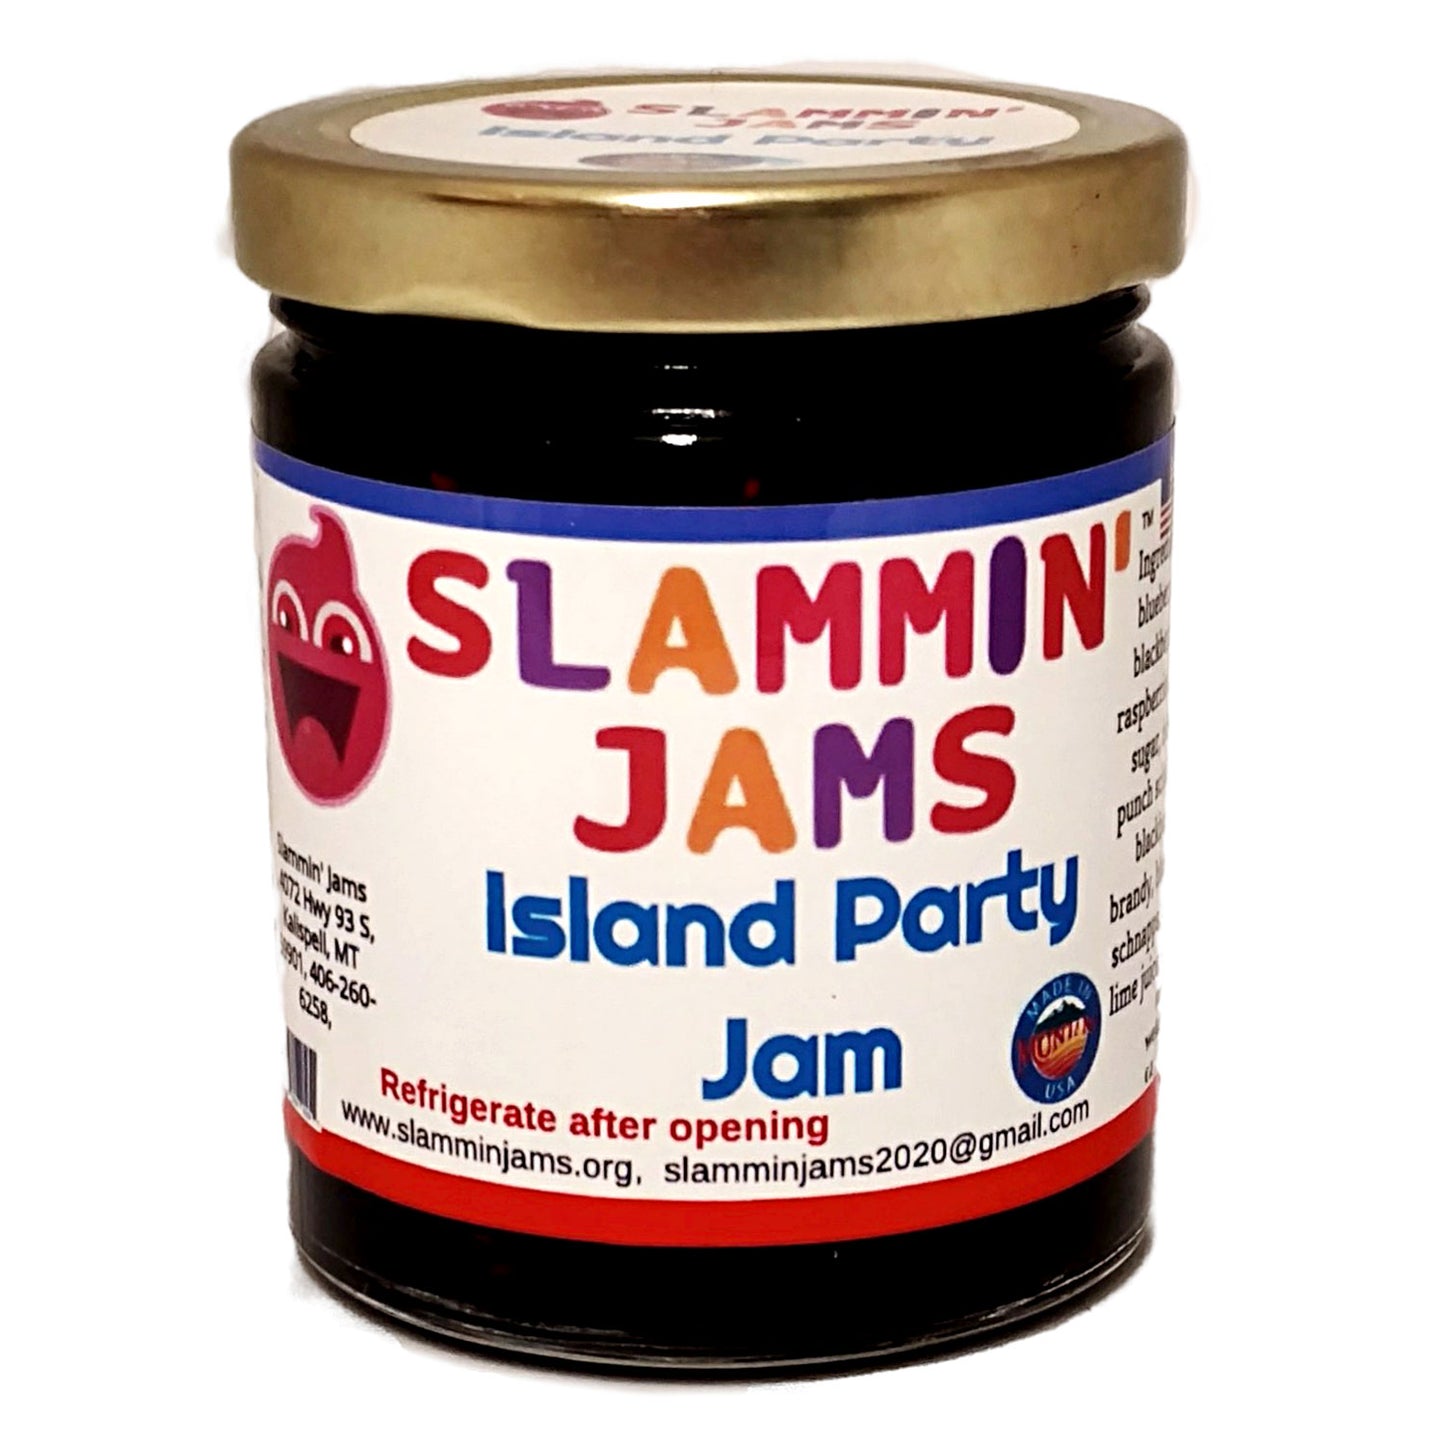 Island Party Jam